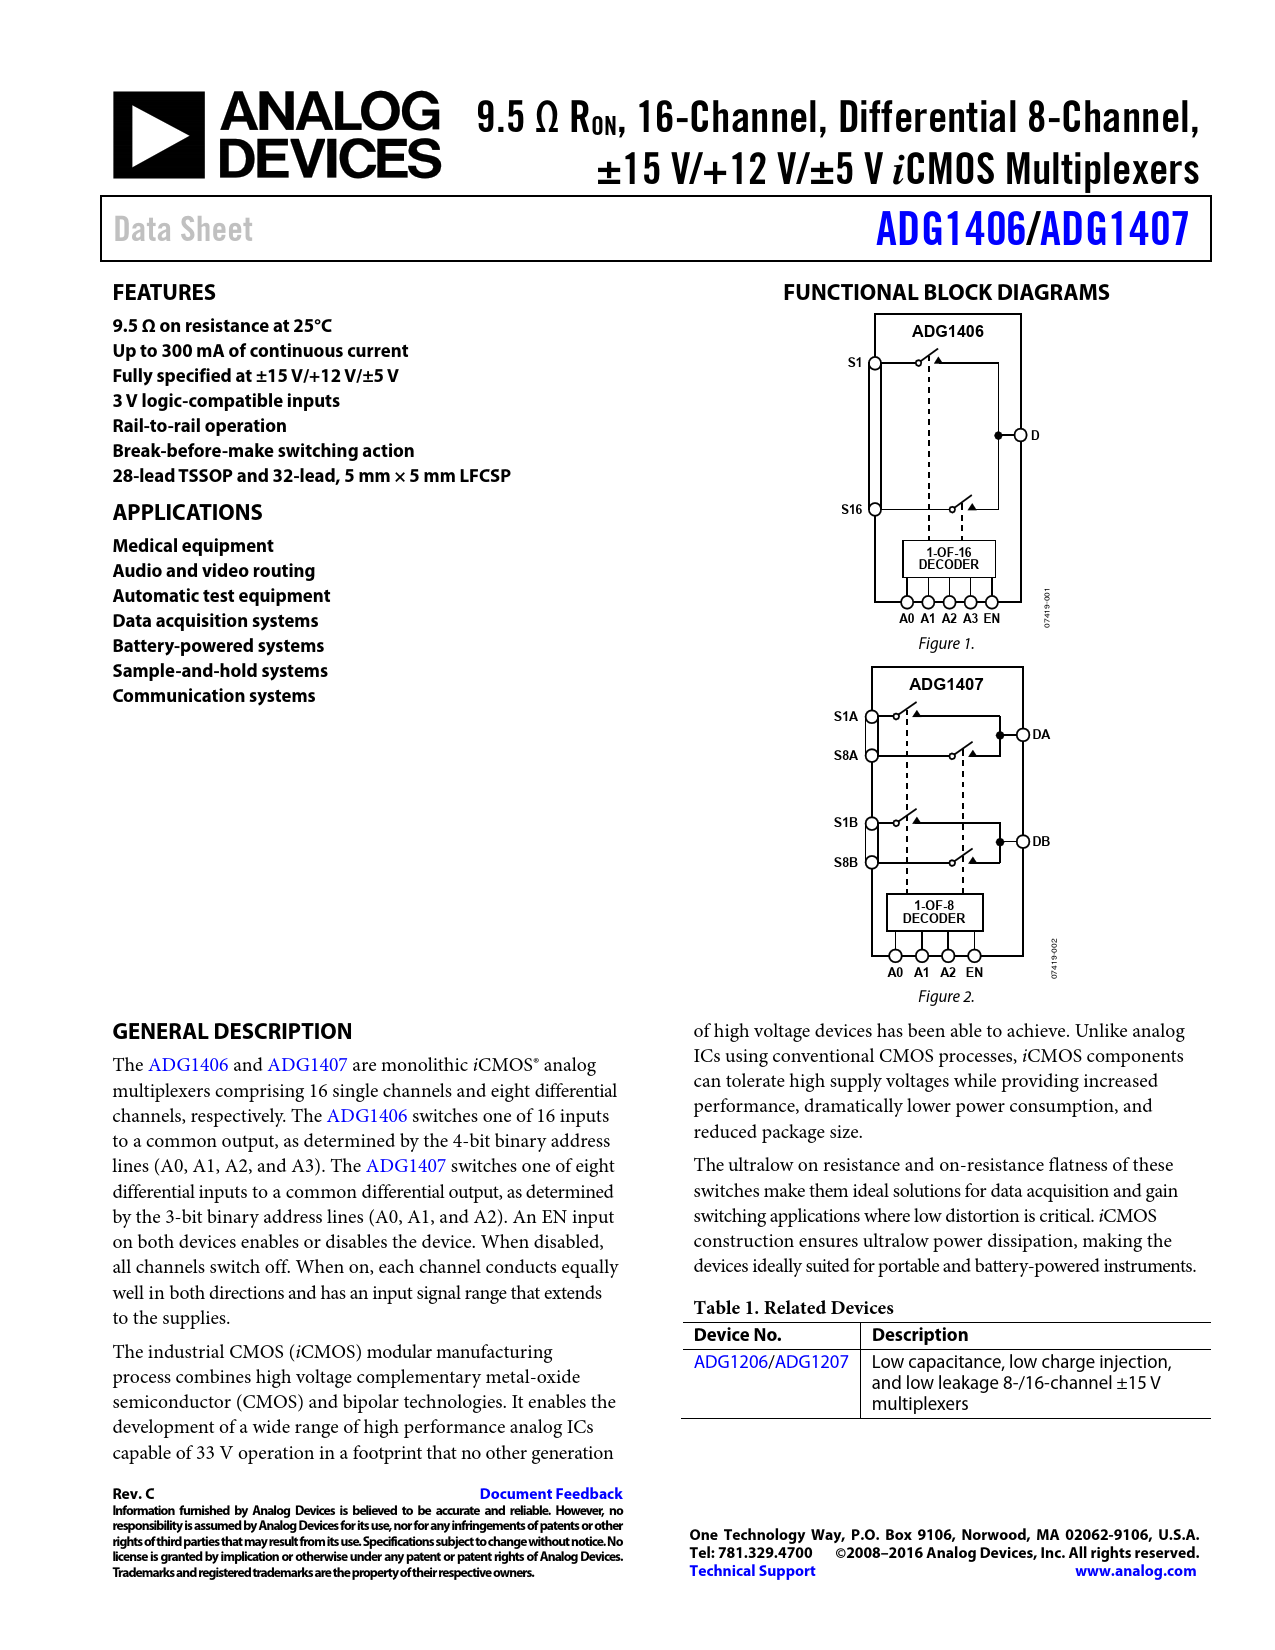 Datasheet ADG1406, ADG1407 Analog Devices, Revision: C